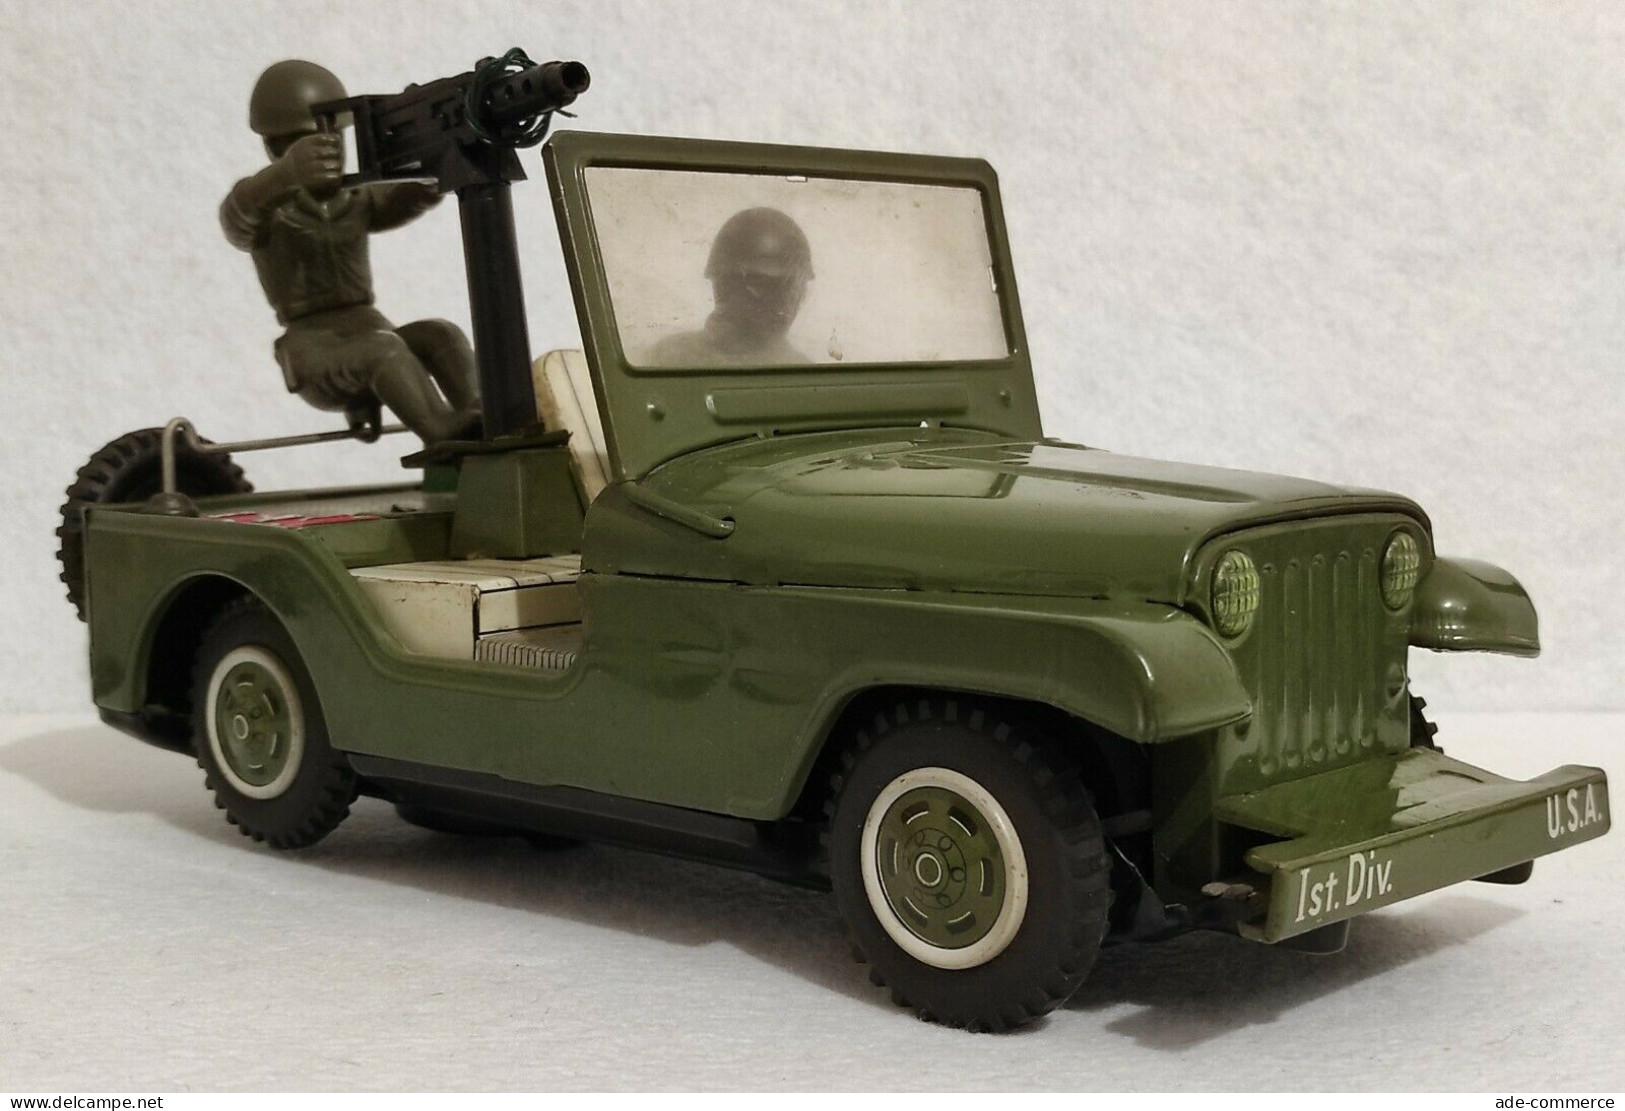 T.N Made in Japan - Jeep Ranger Militare - Giocattolo Latta Batteria - Vintage